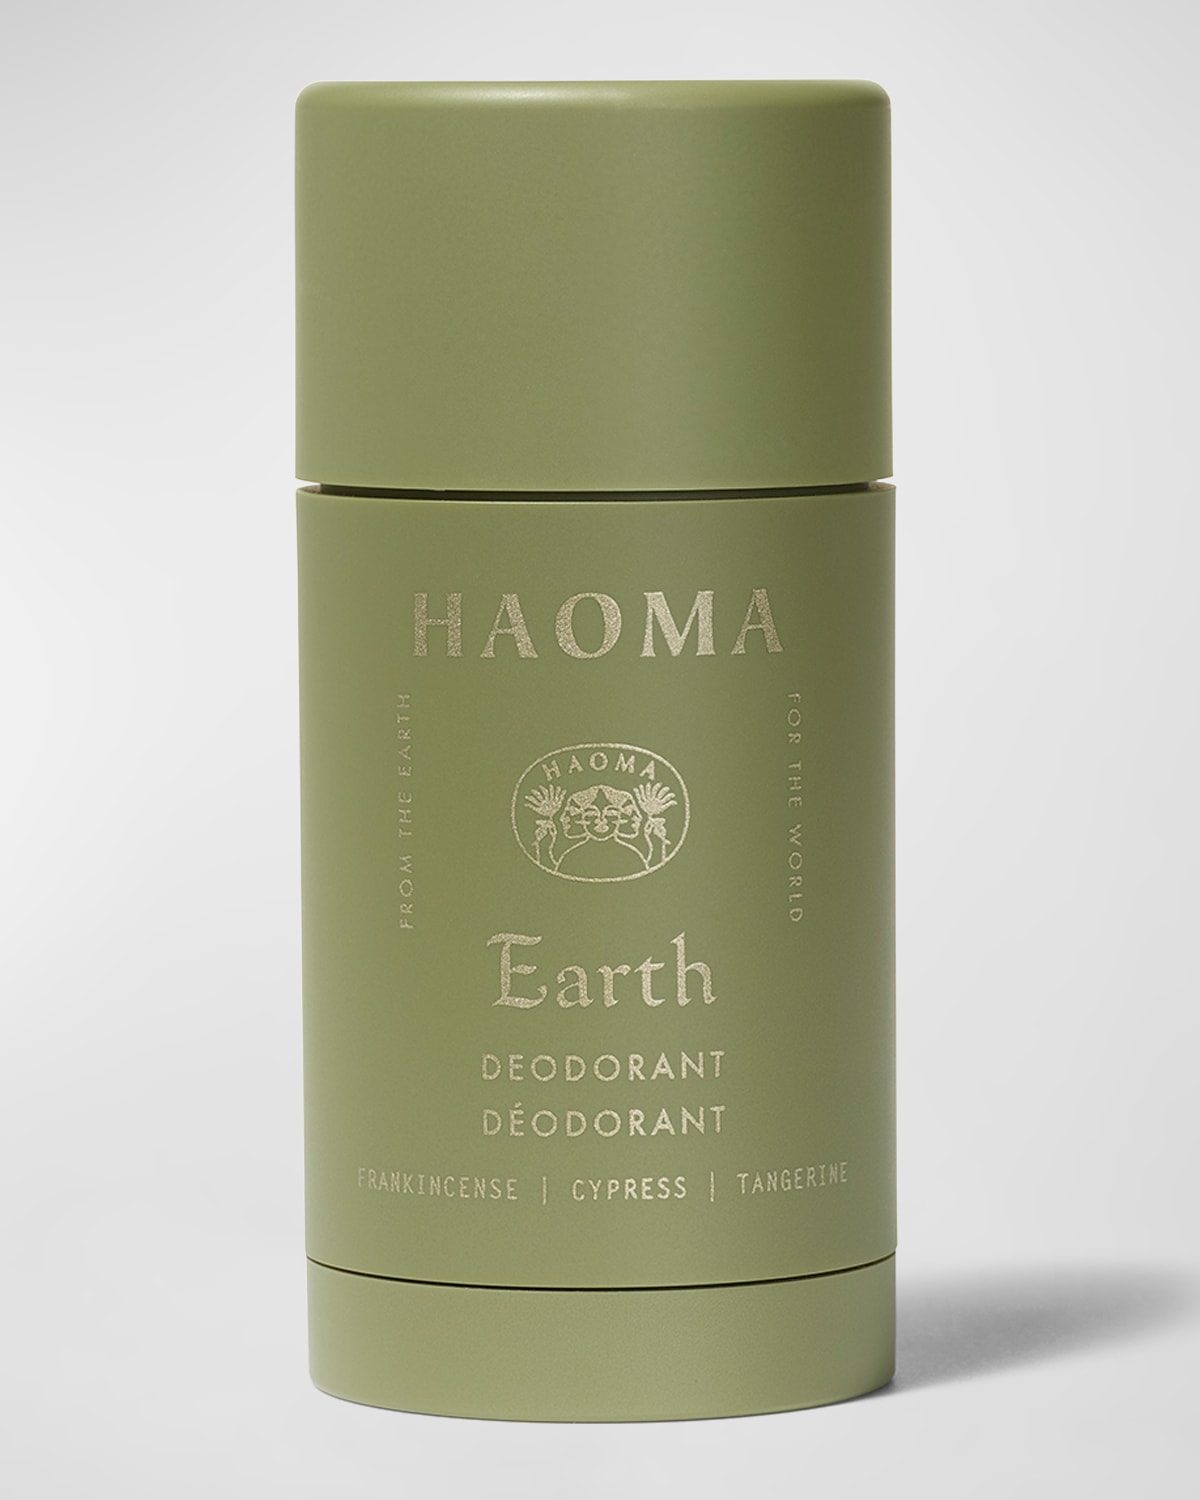 Haoma Earth Deodorant, 2.7 oz.